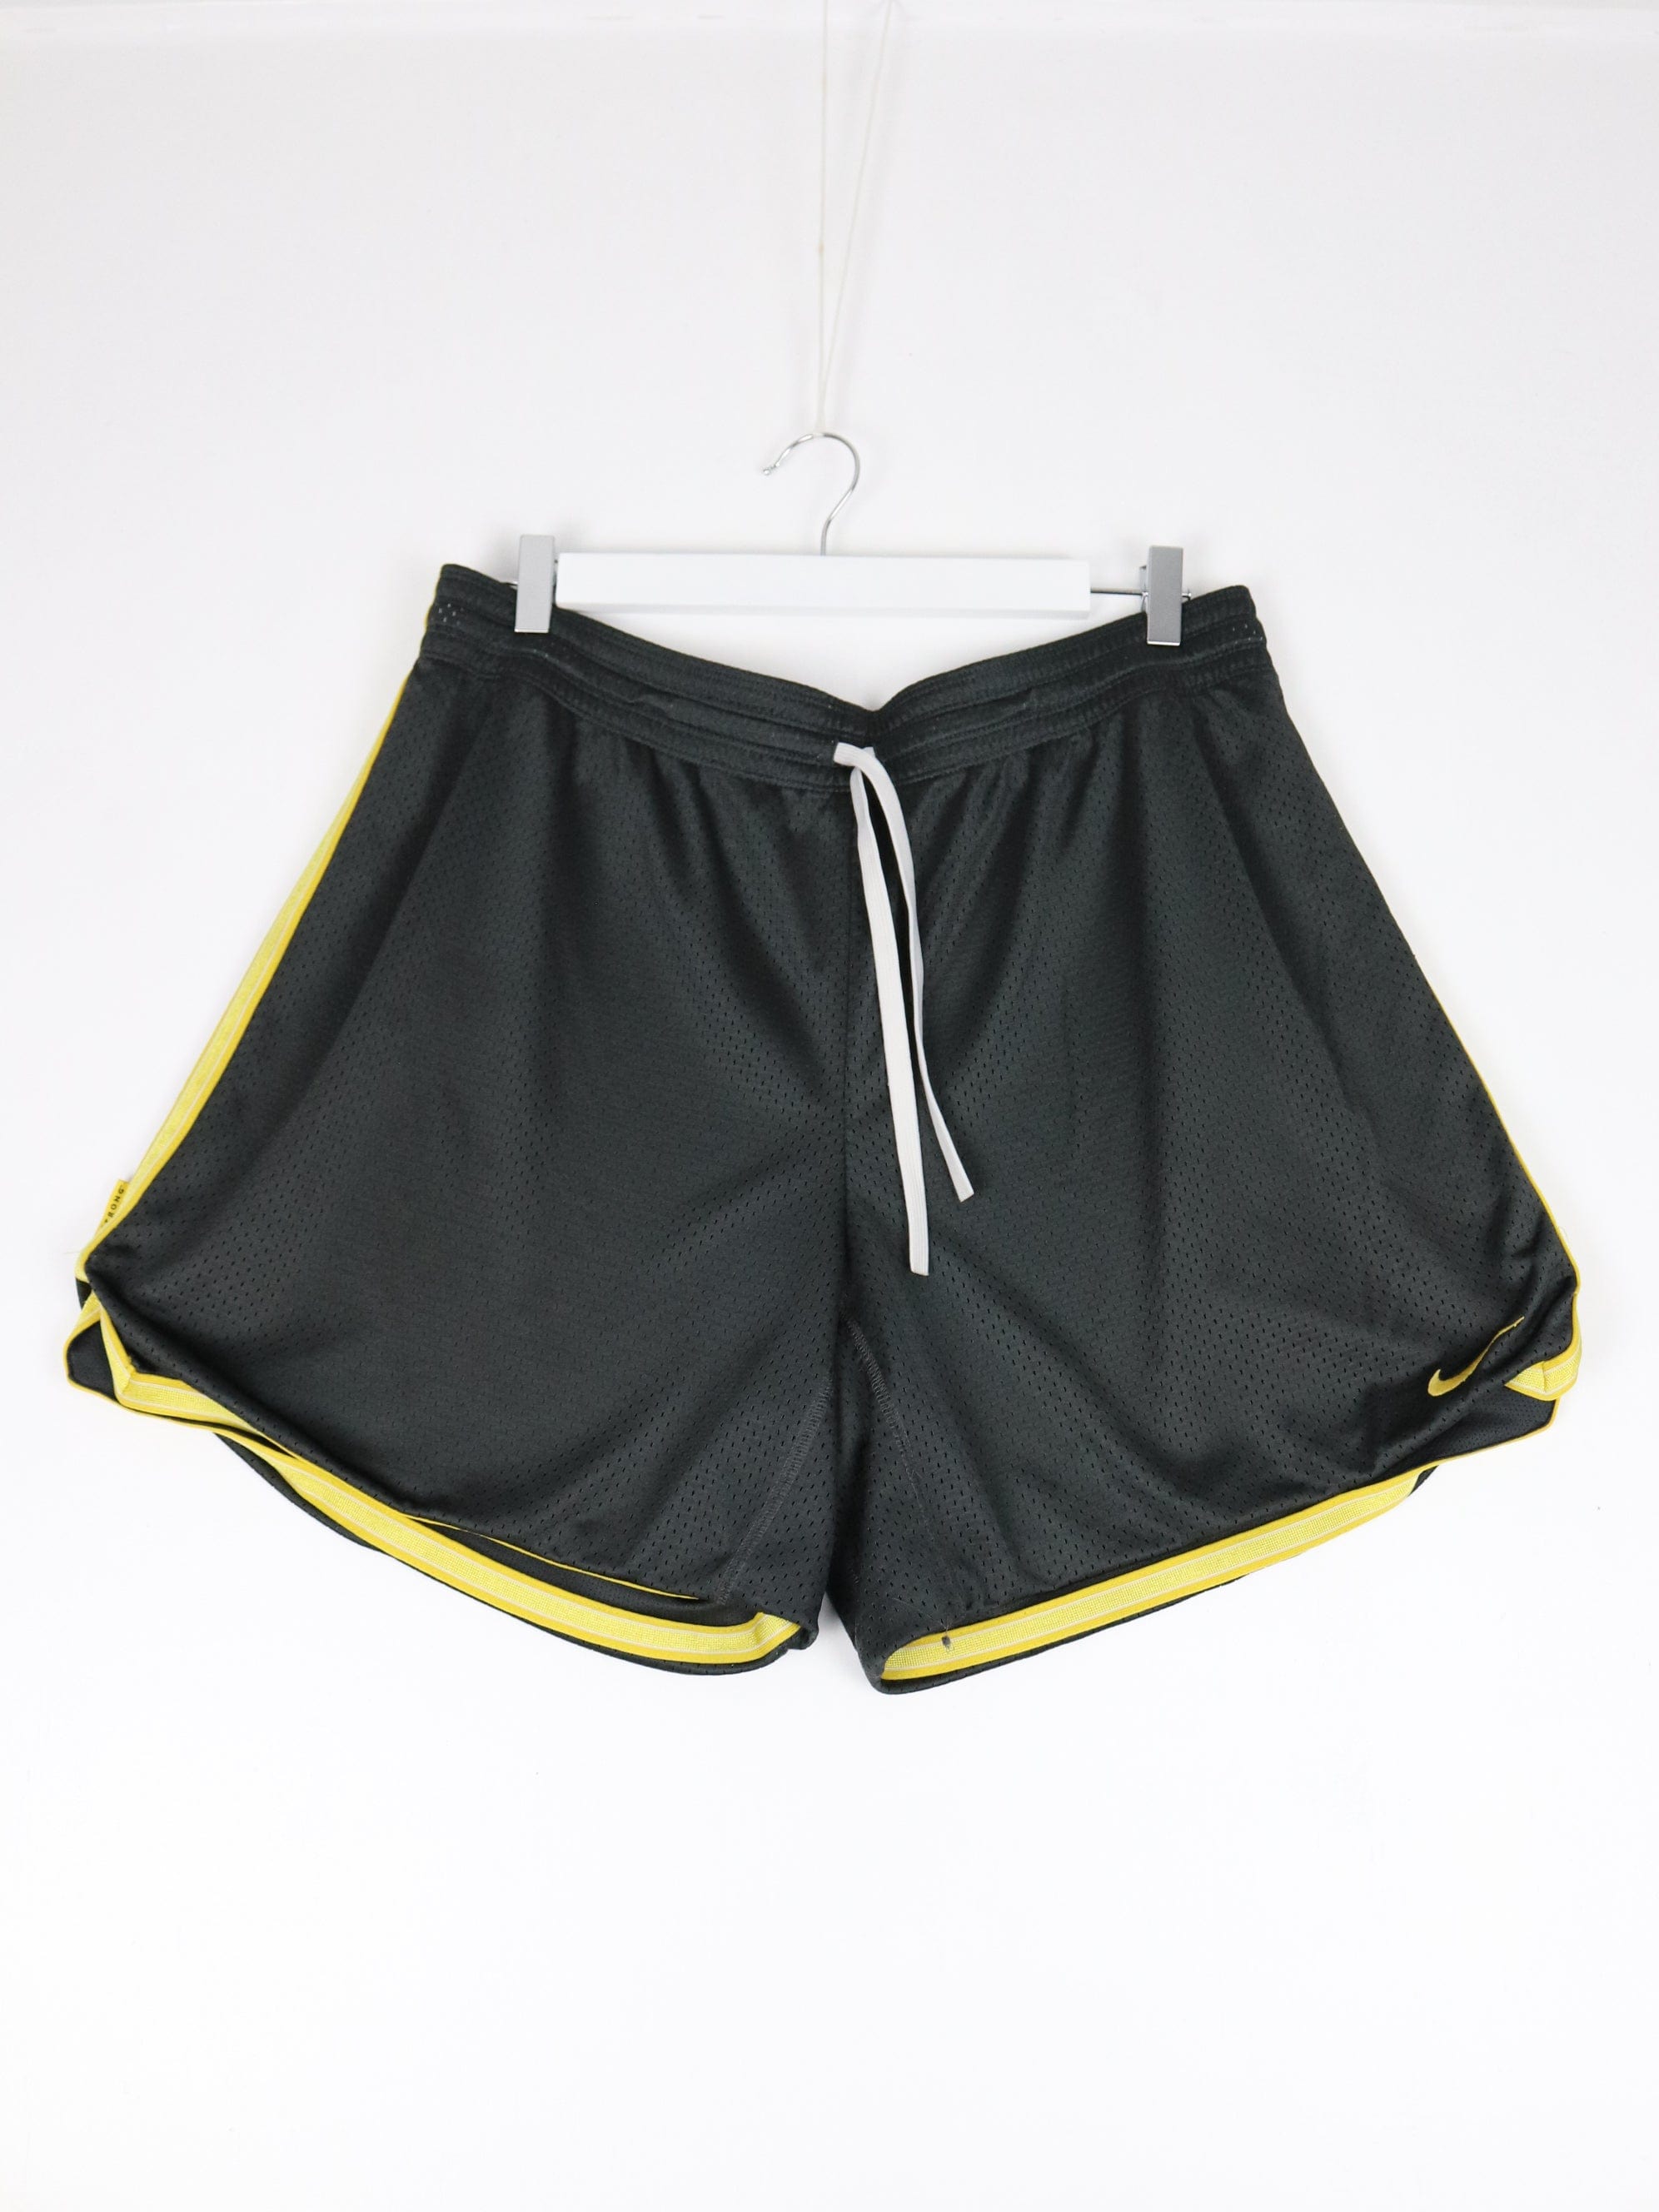 Nike Shorts Mens XL Grey Mesh Athletic Dri-Fit